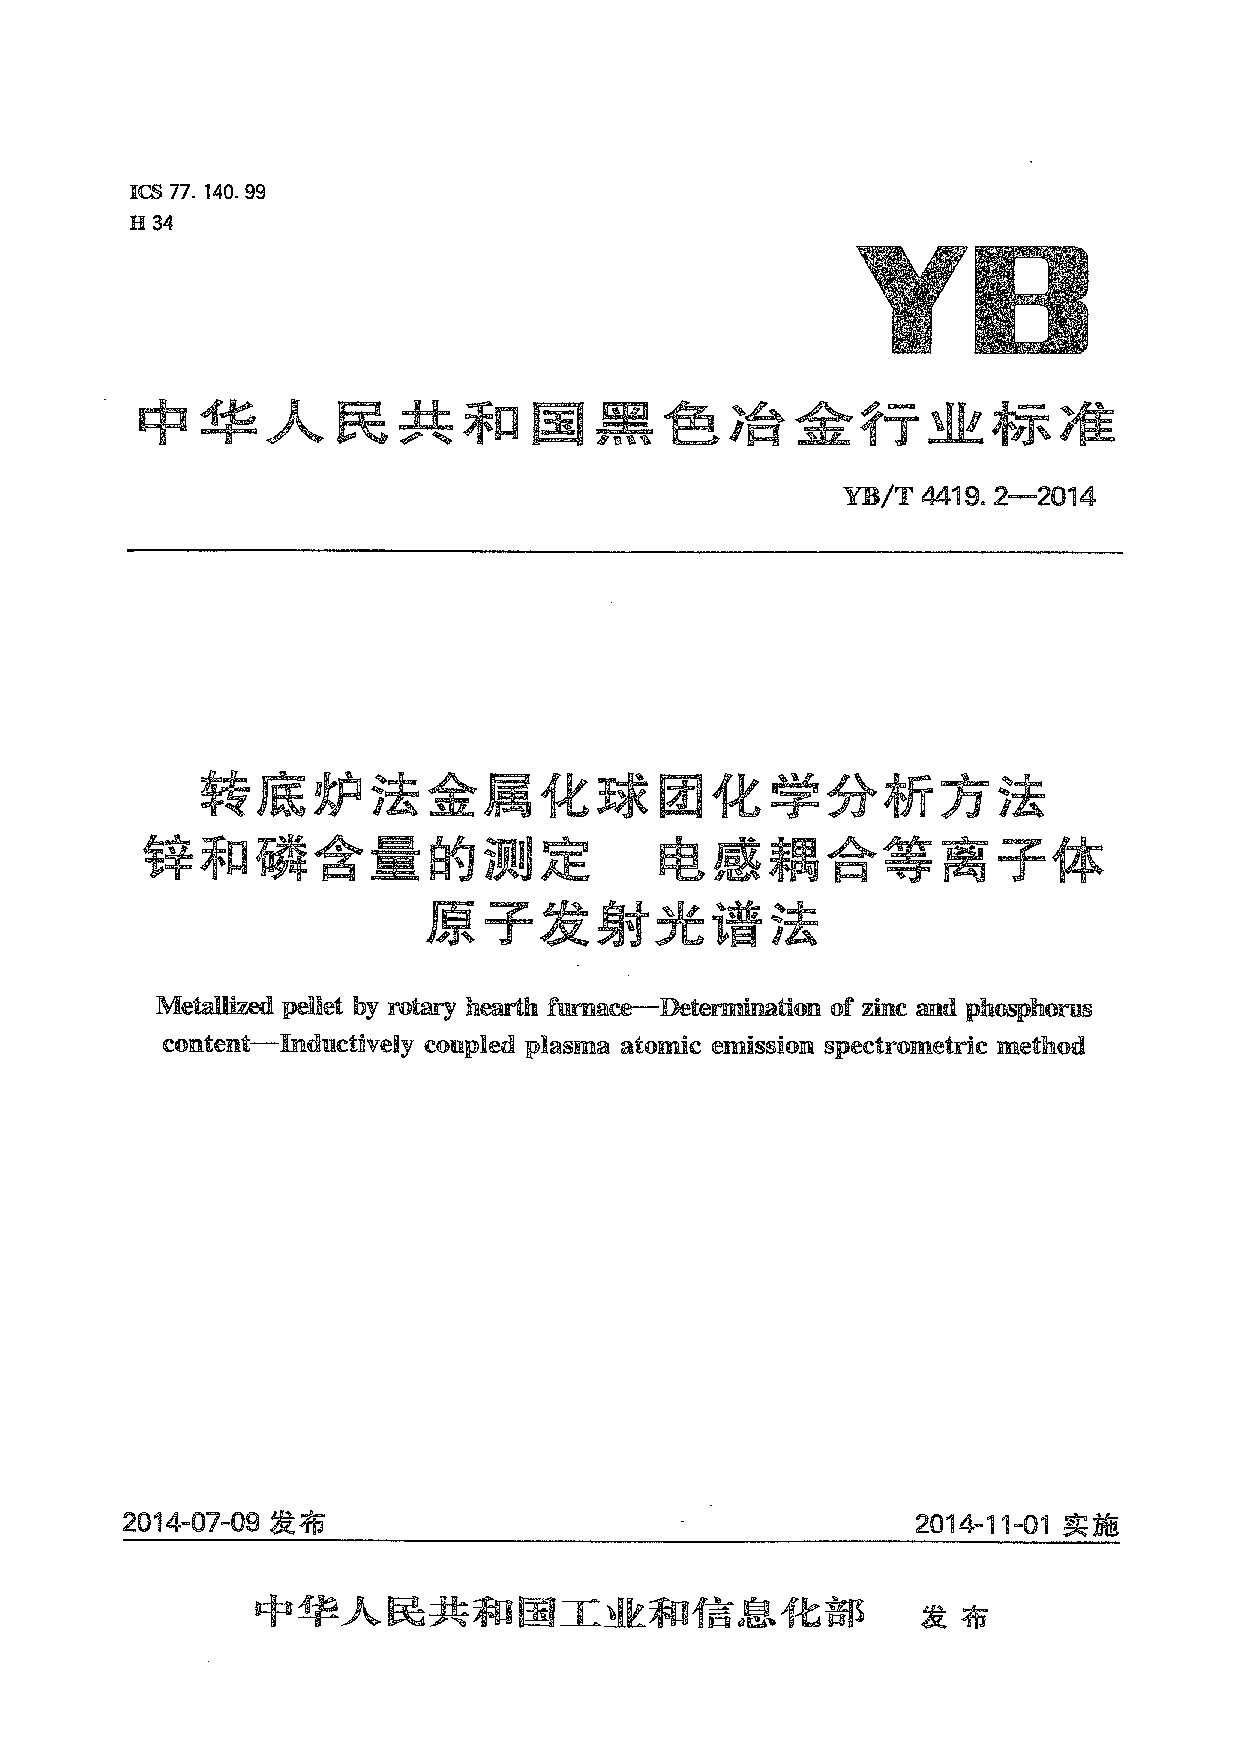 YB/T 4419.2-2014